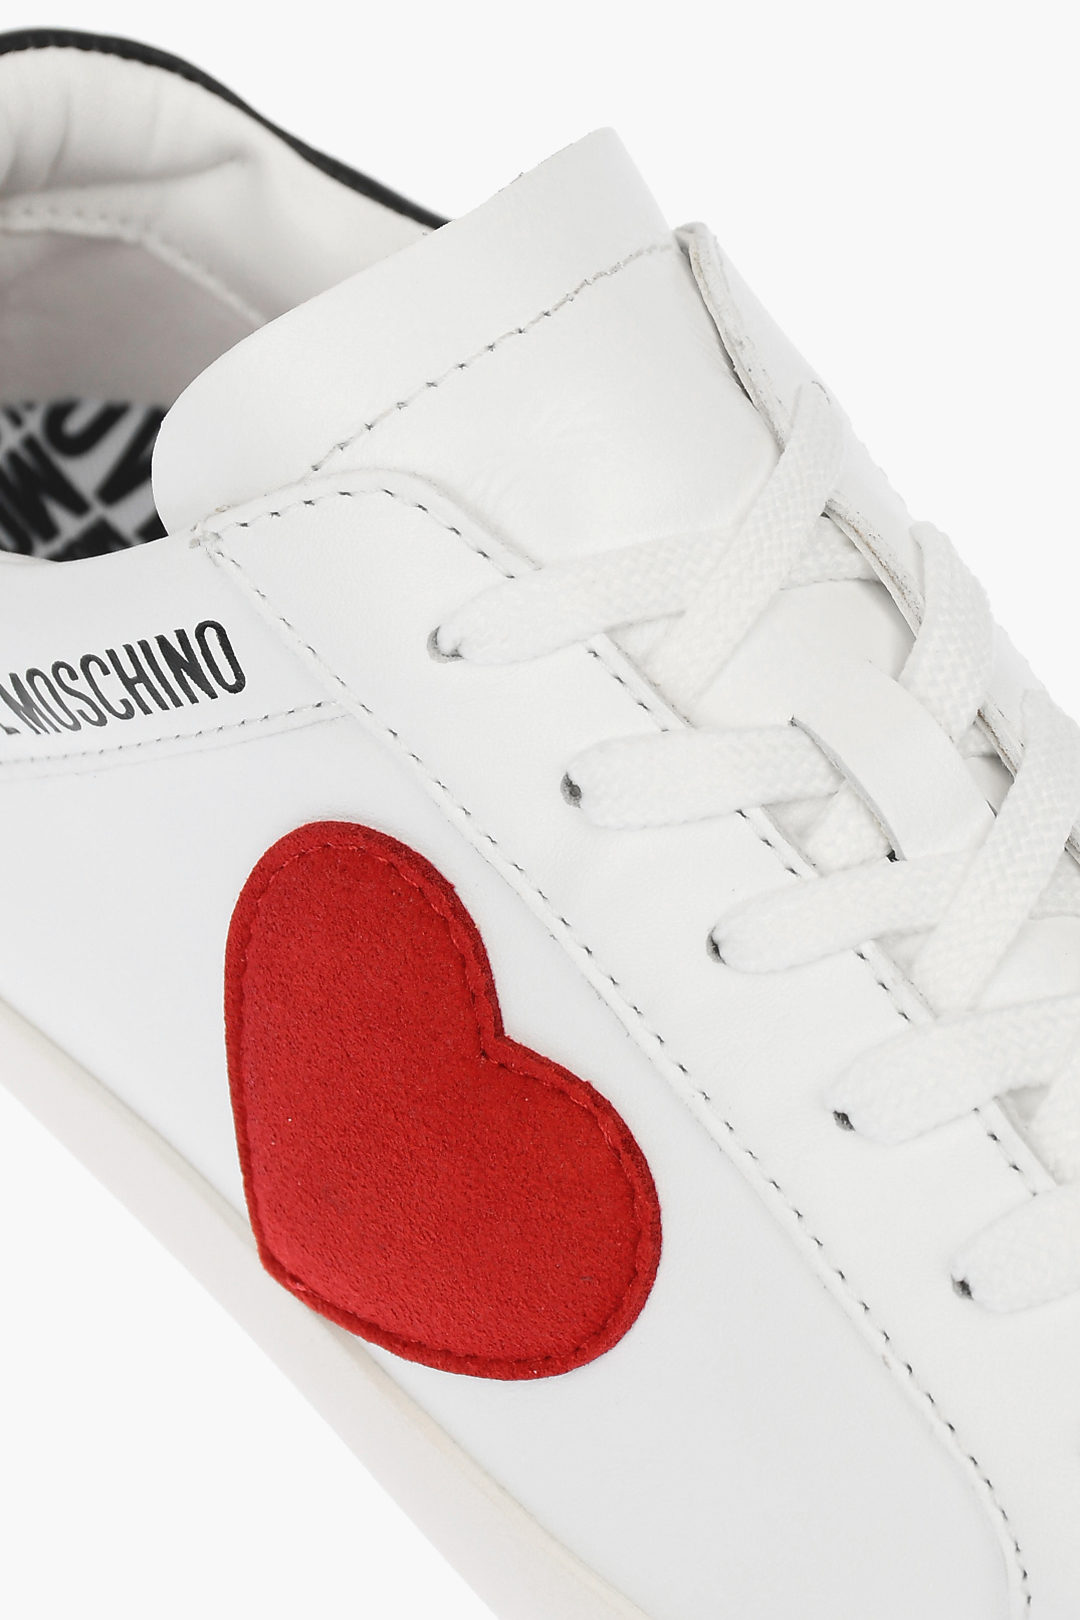 Alexander McQueen Sneakers White, Black Red Heart Women’s EU 39